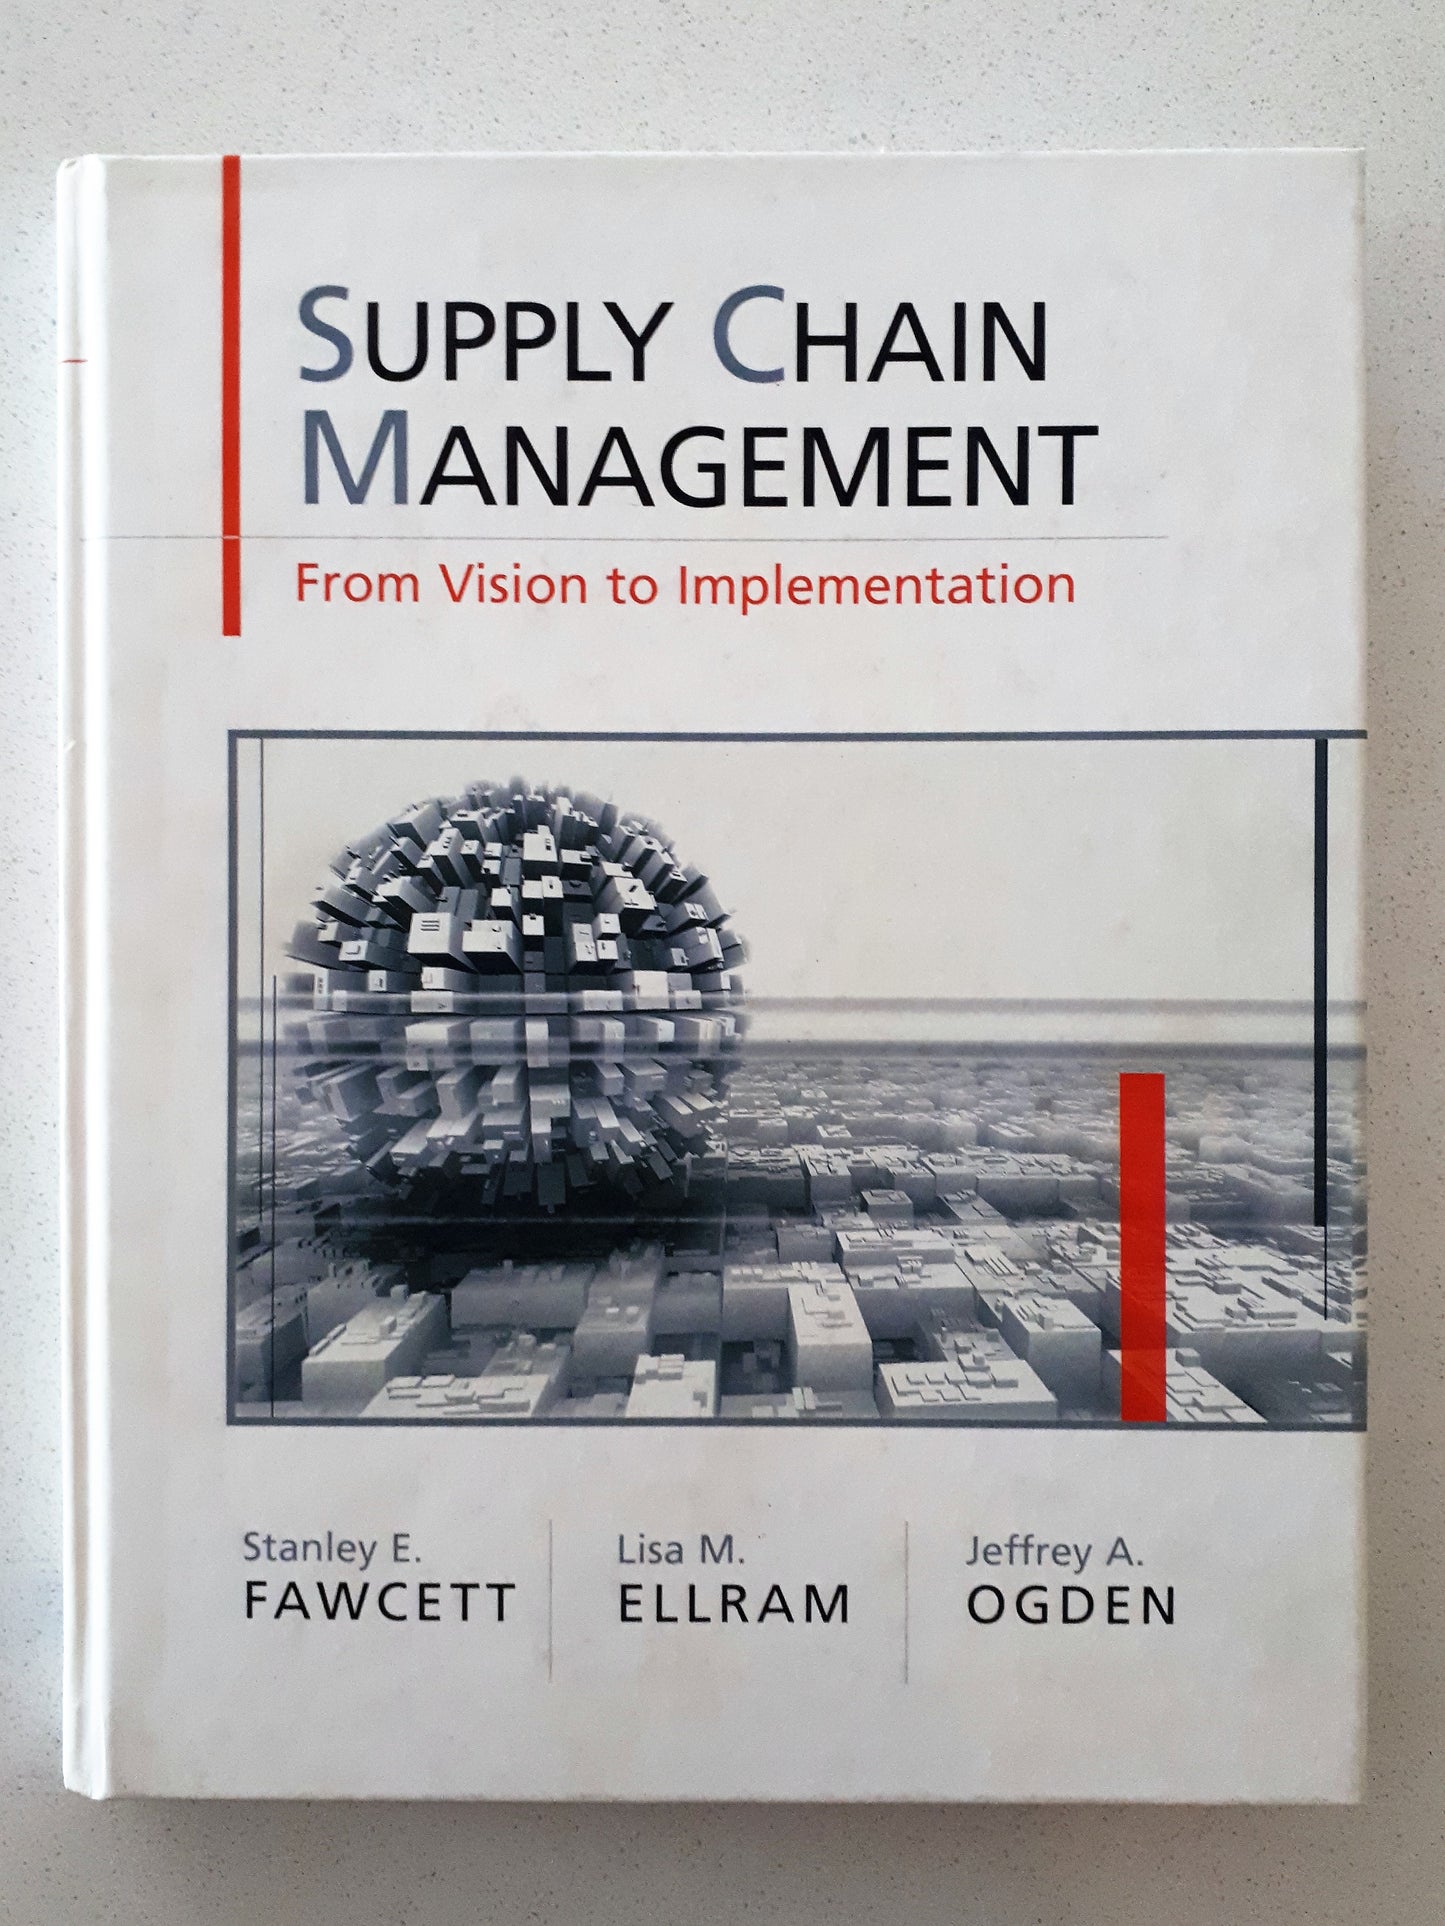 Supply Chain Management by Fawcett, Ellram and Ogden